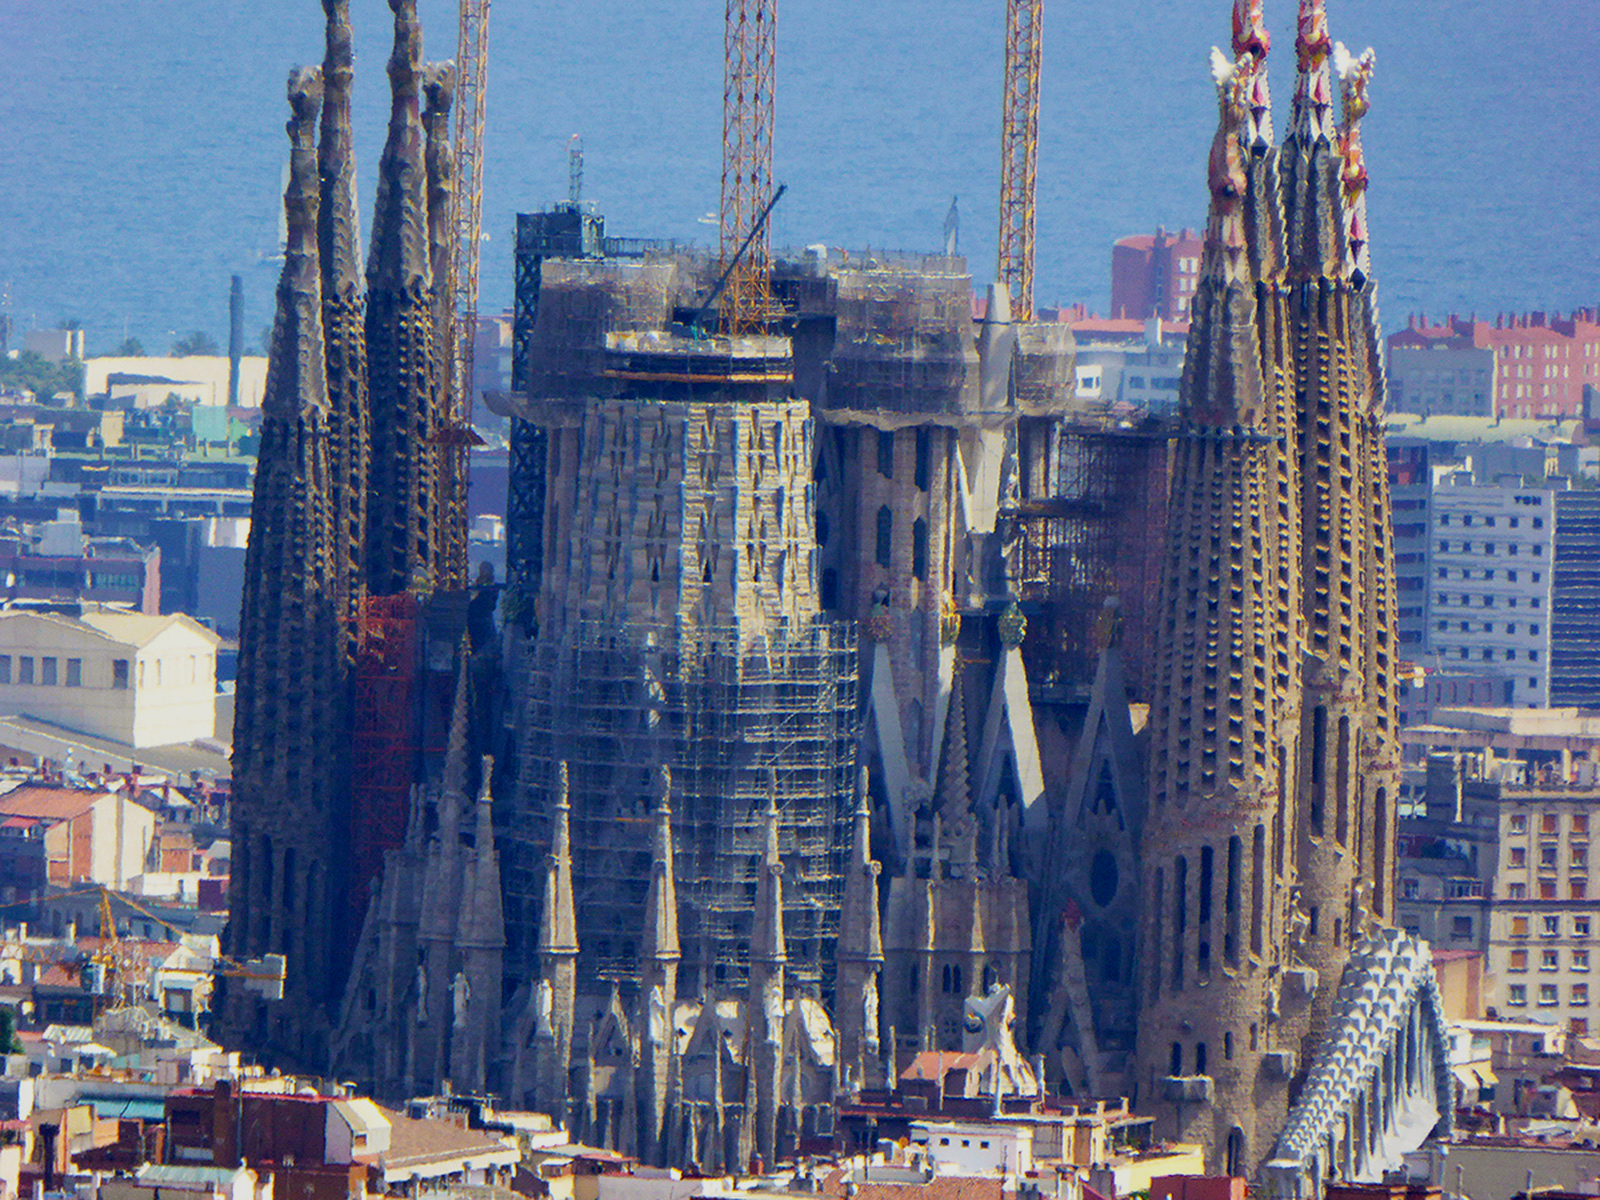 Barcelona – “Must See” Works of Antoni Gaudí